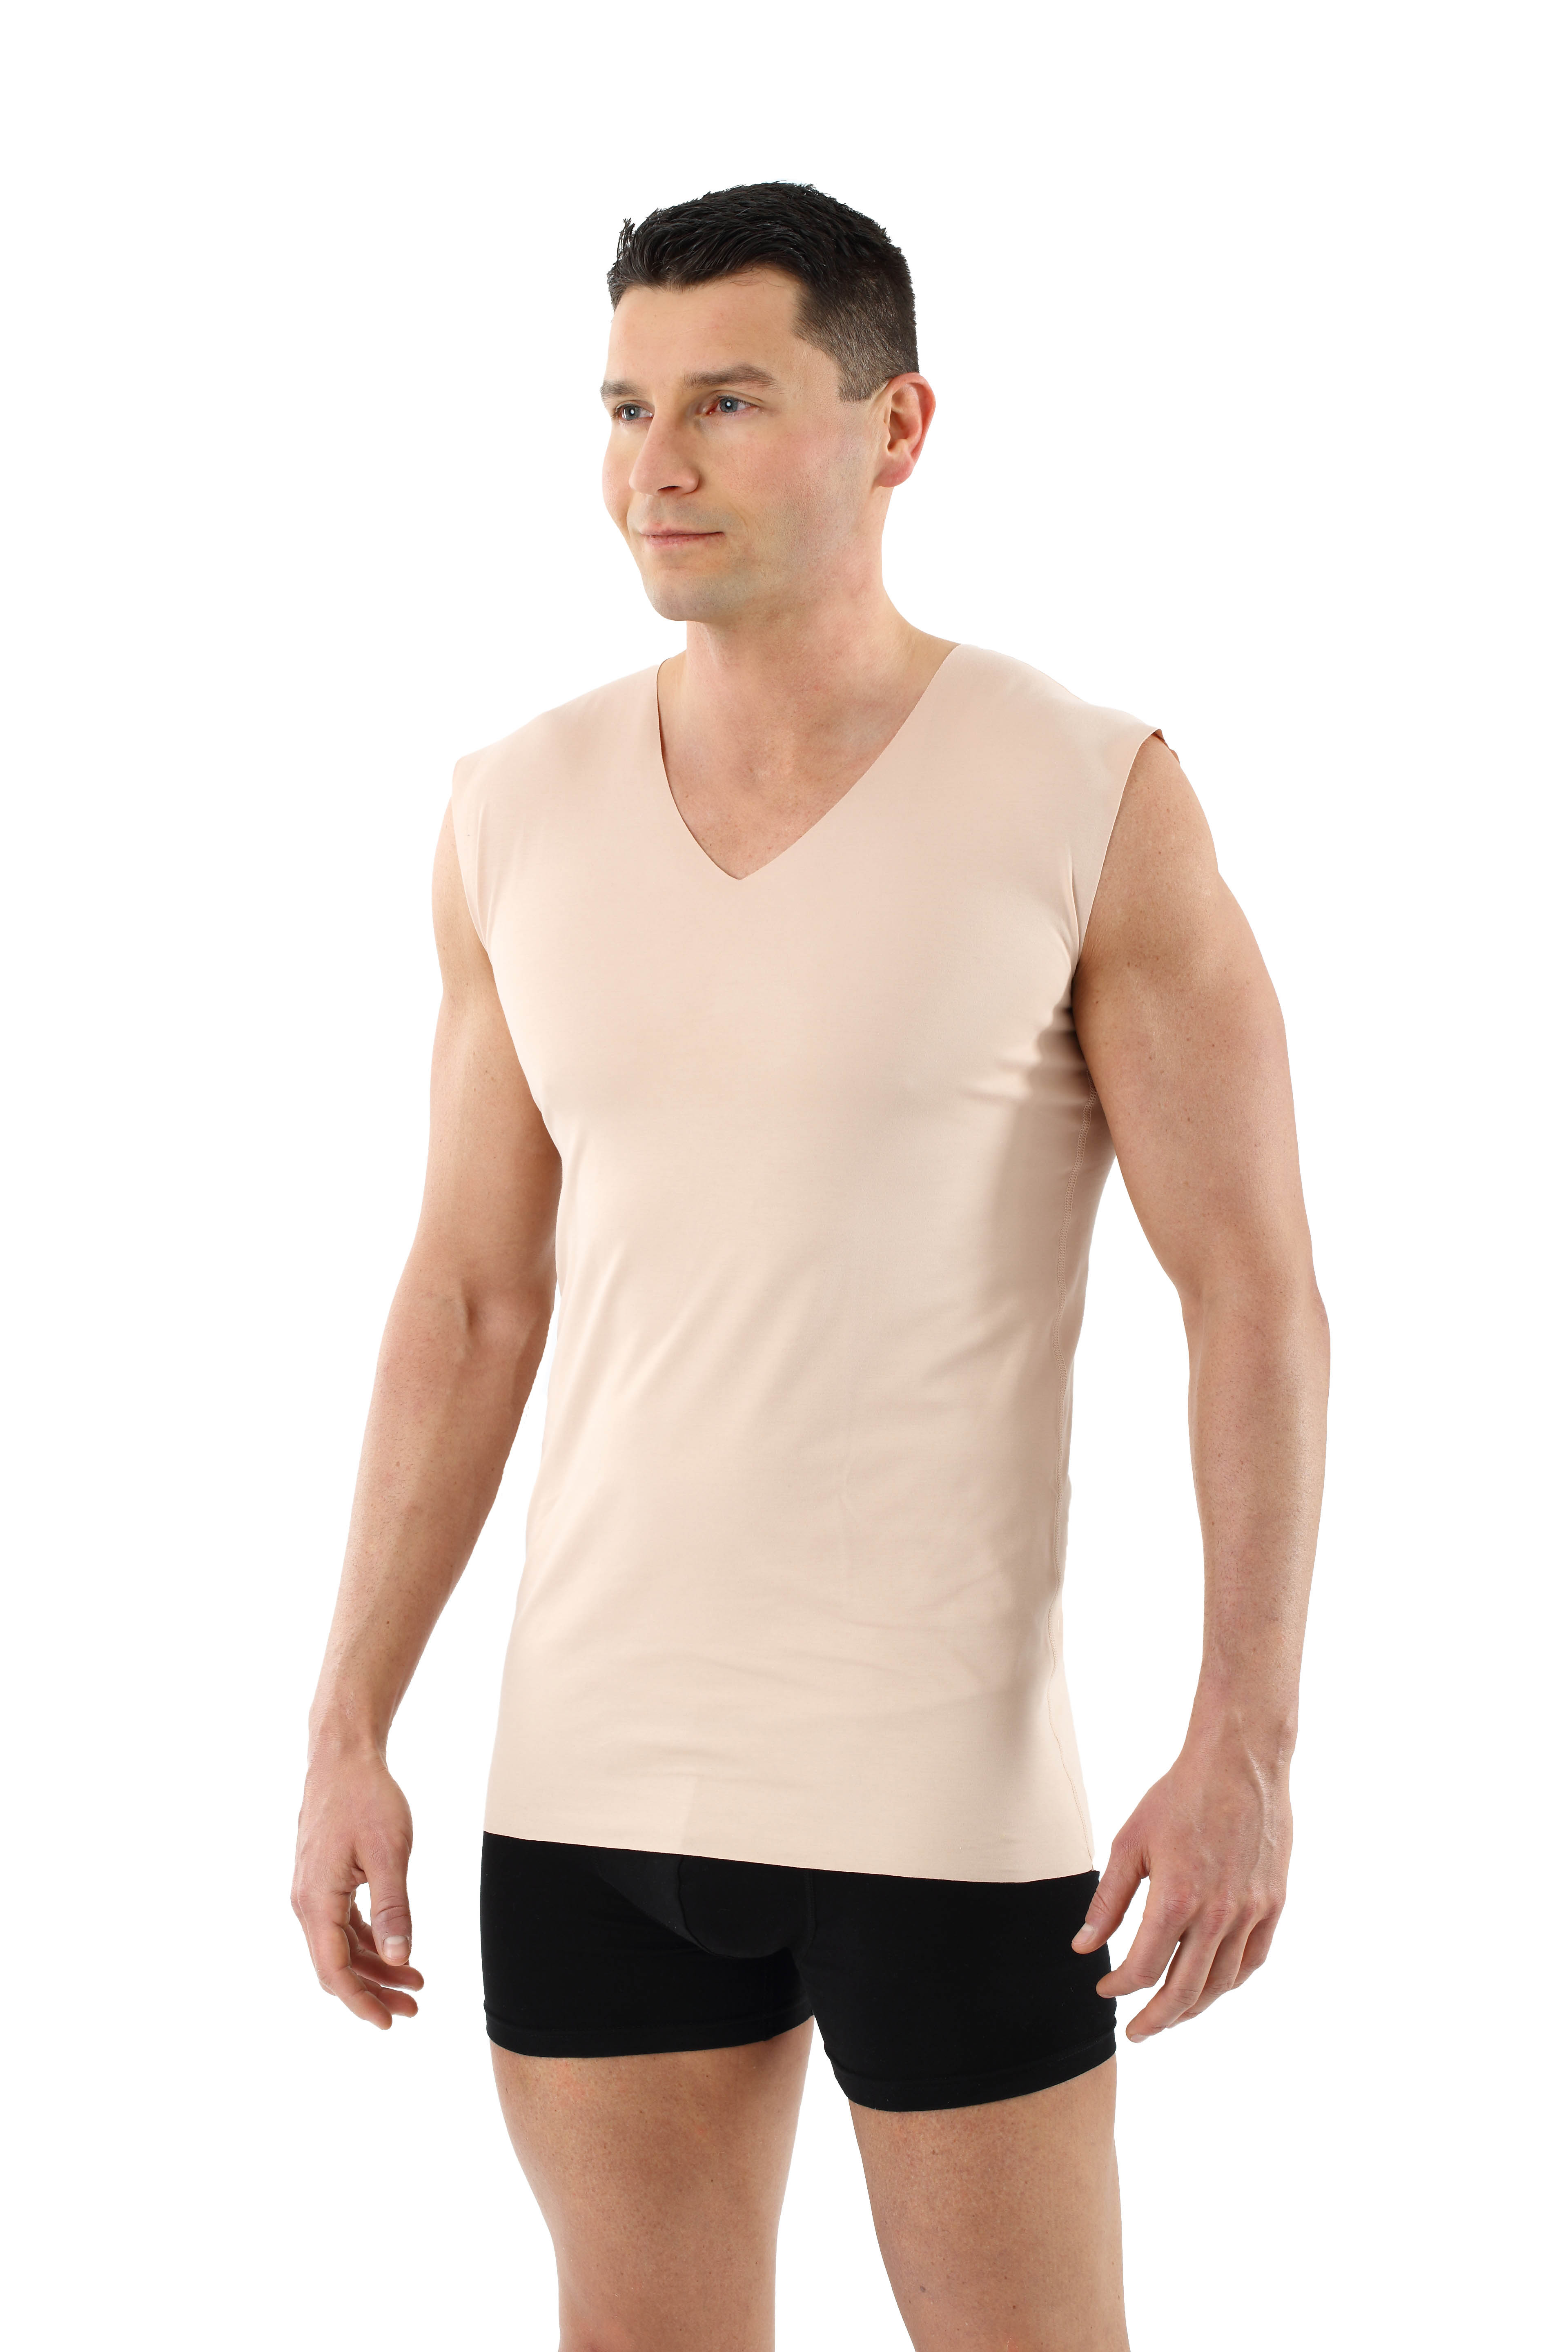 ALBERT KREUZ  Laser cut invisible seamless v-neck undershirt sleeveless  stretch cotton beige